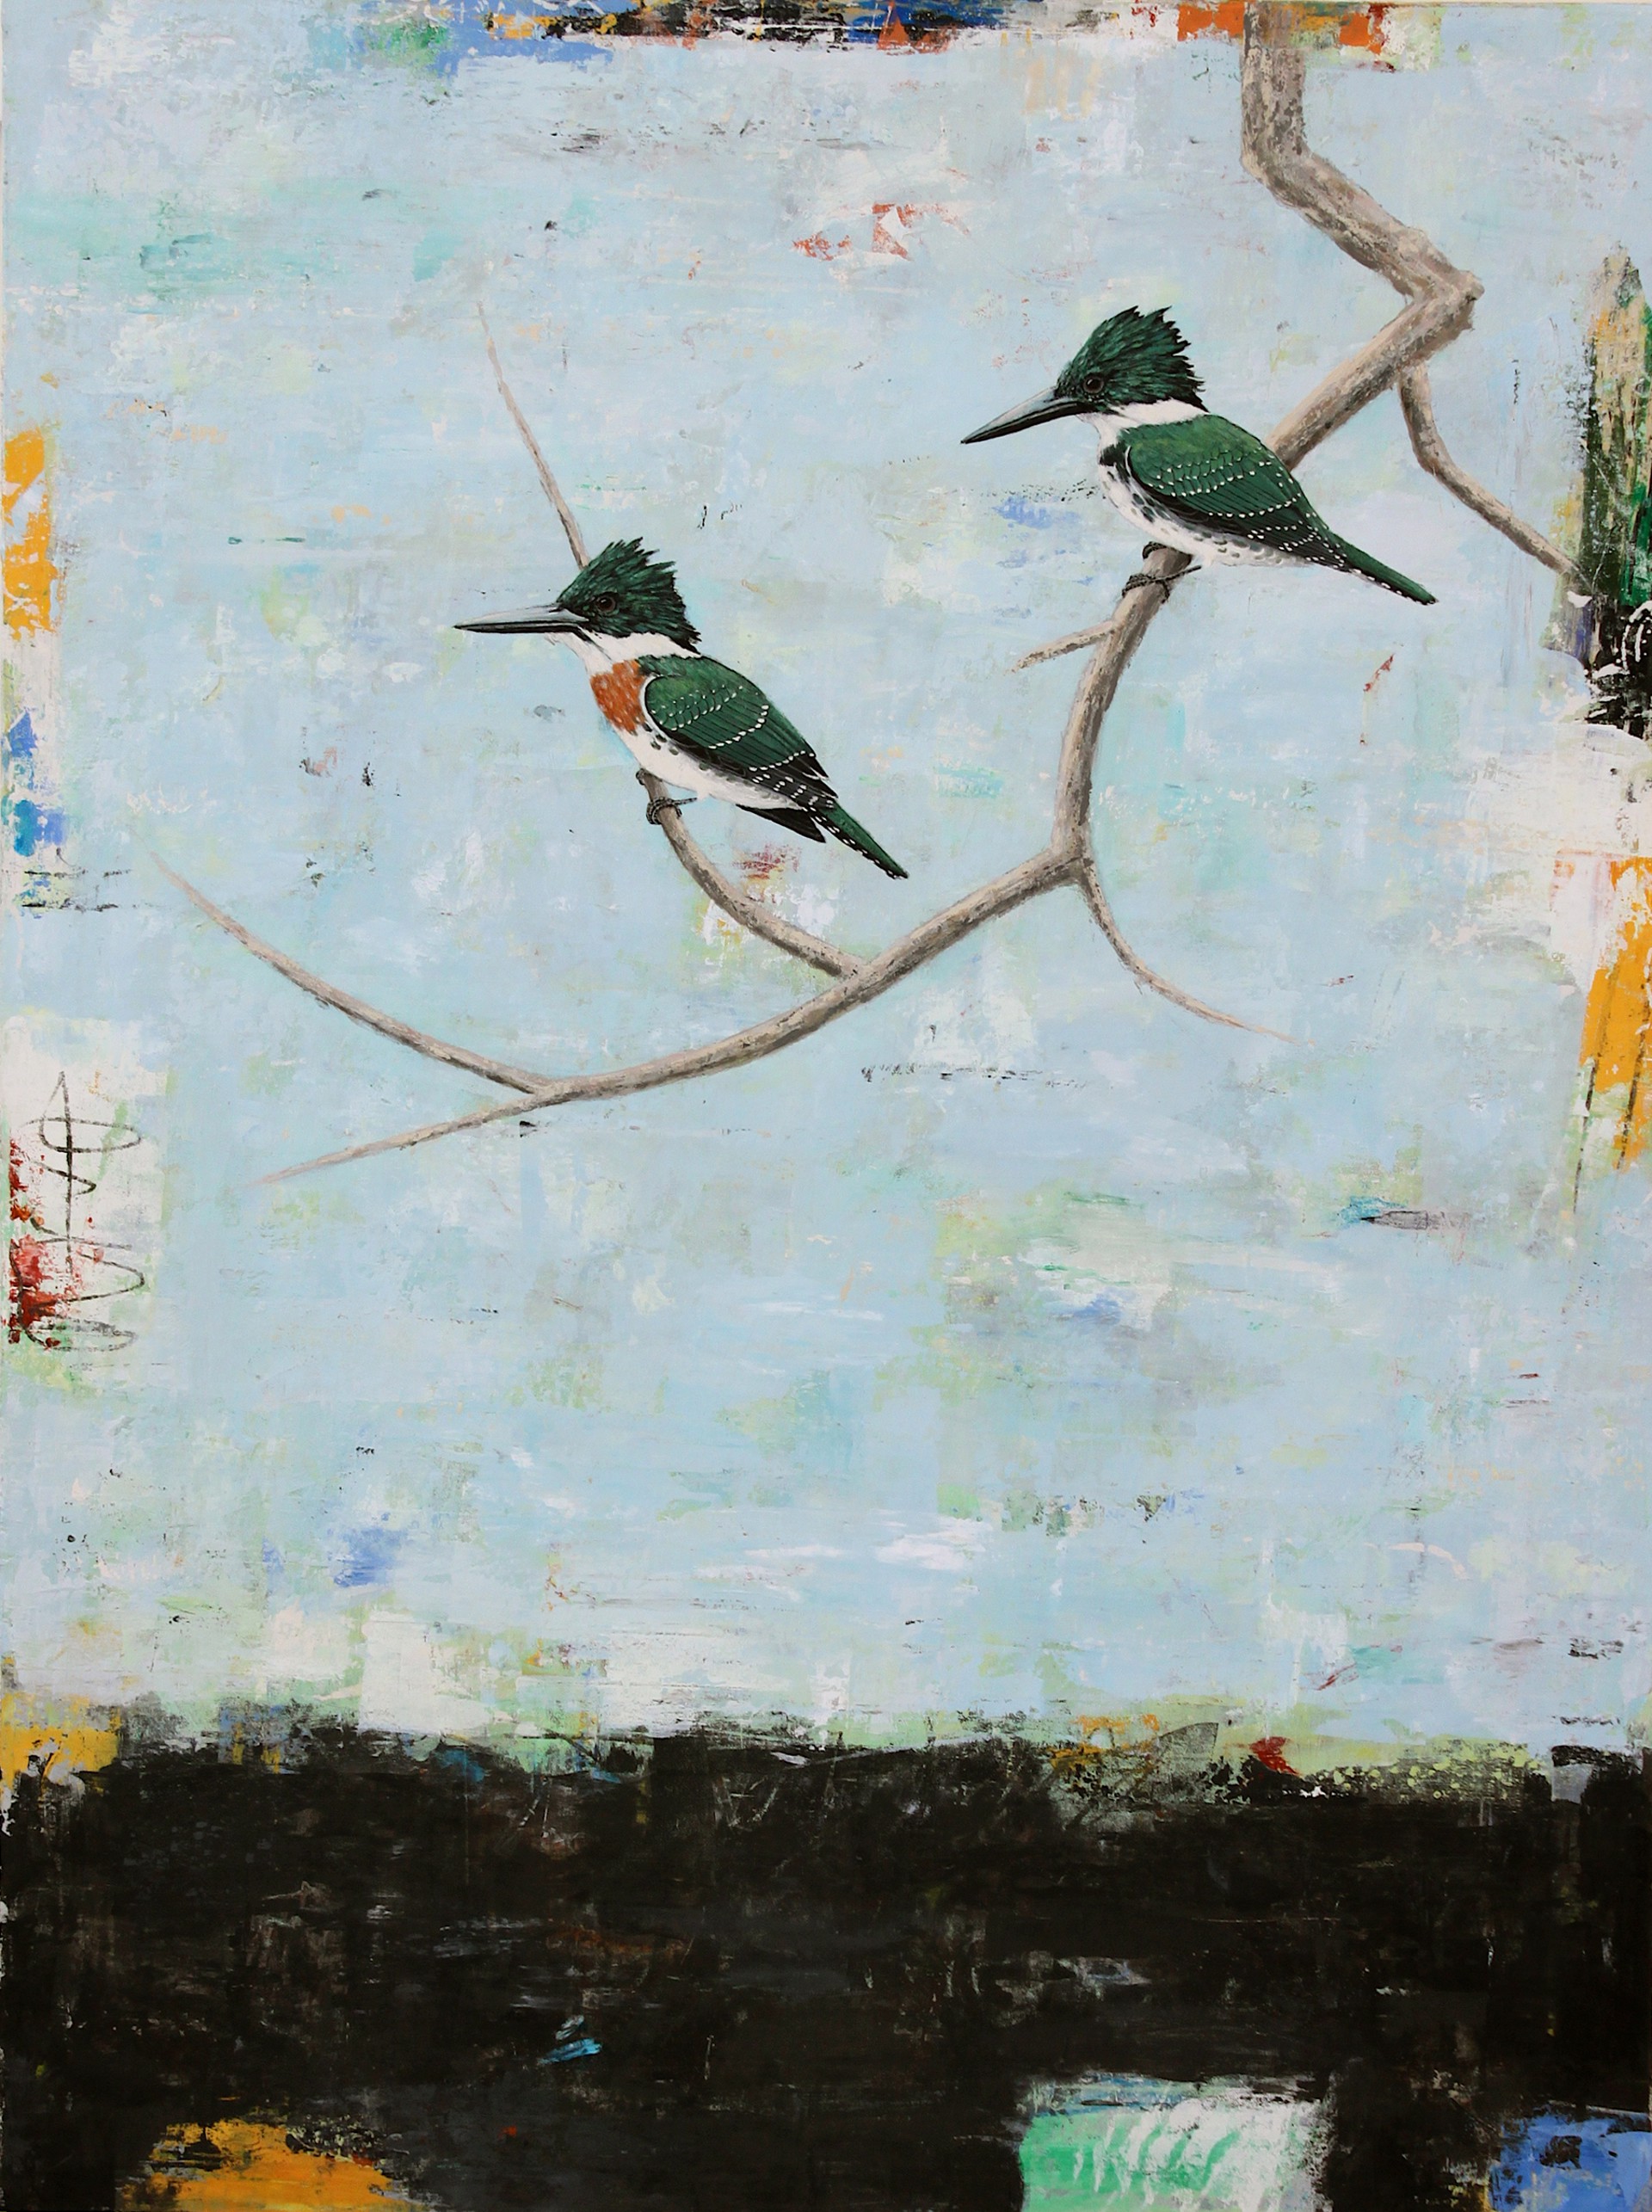 Beacon (Green Kingfishers) by Paul Brigham